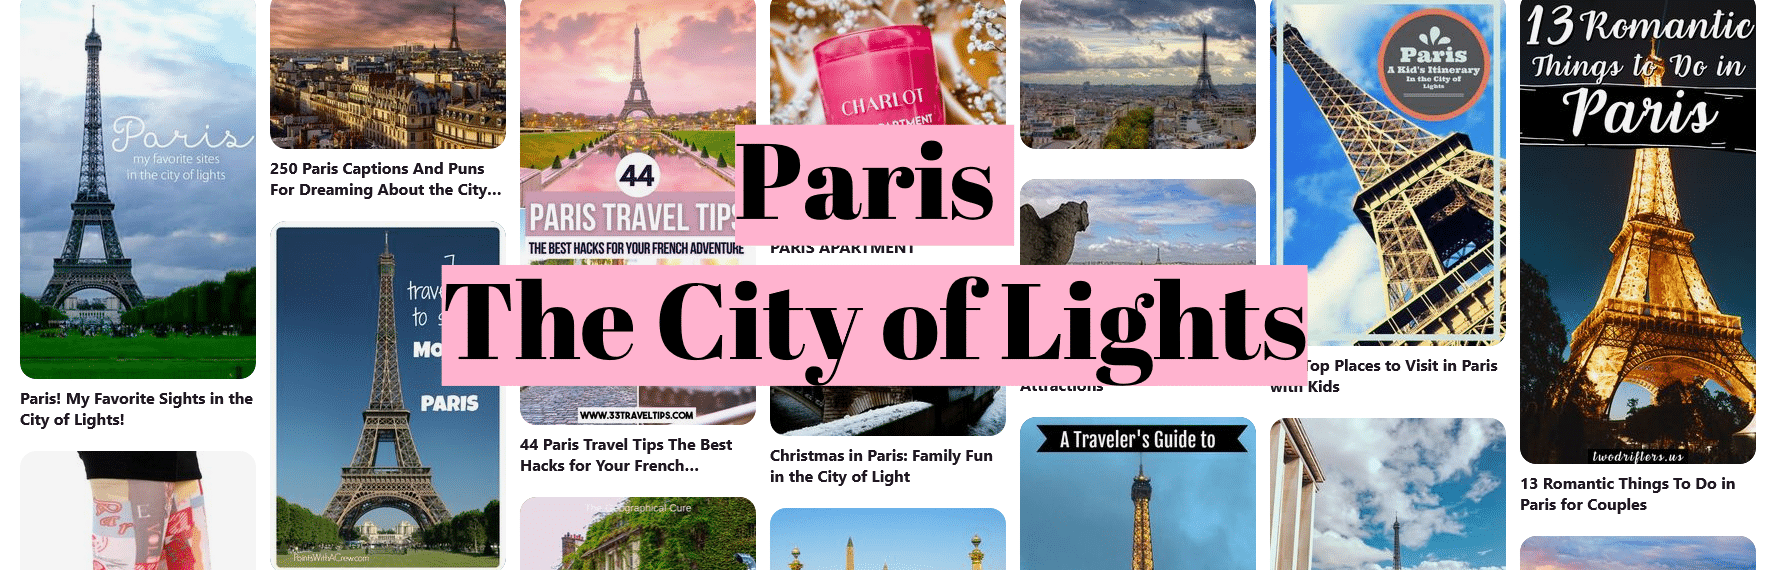 Paris The City of Lights